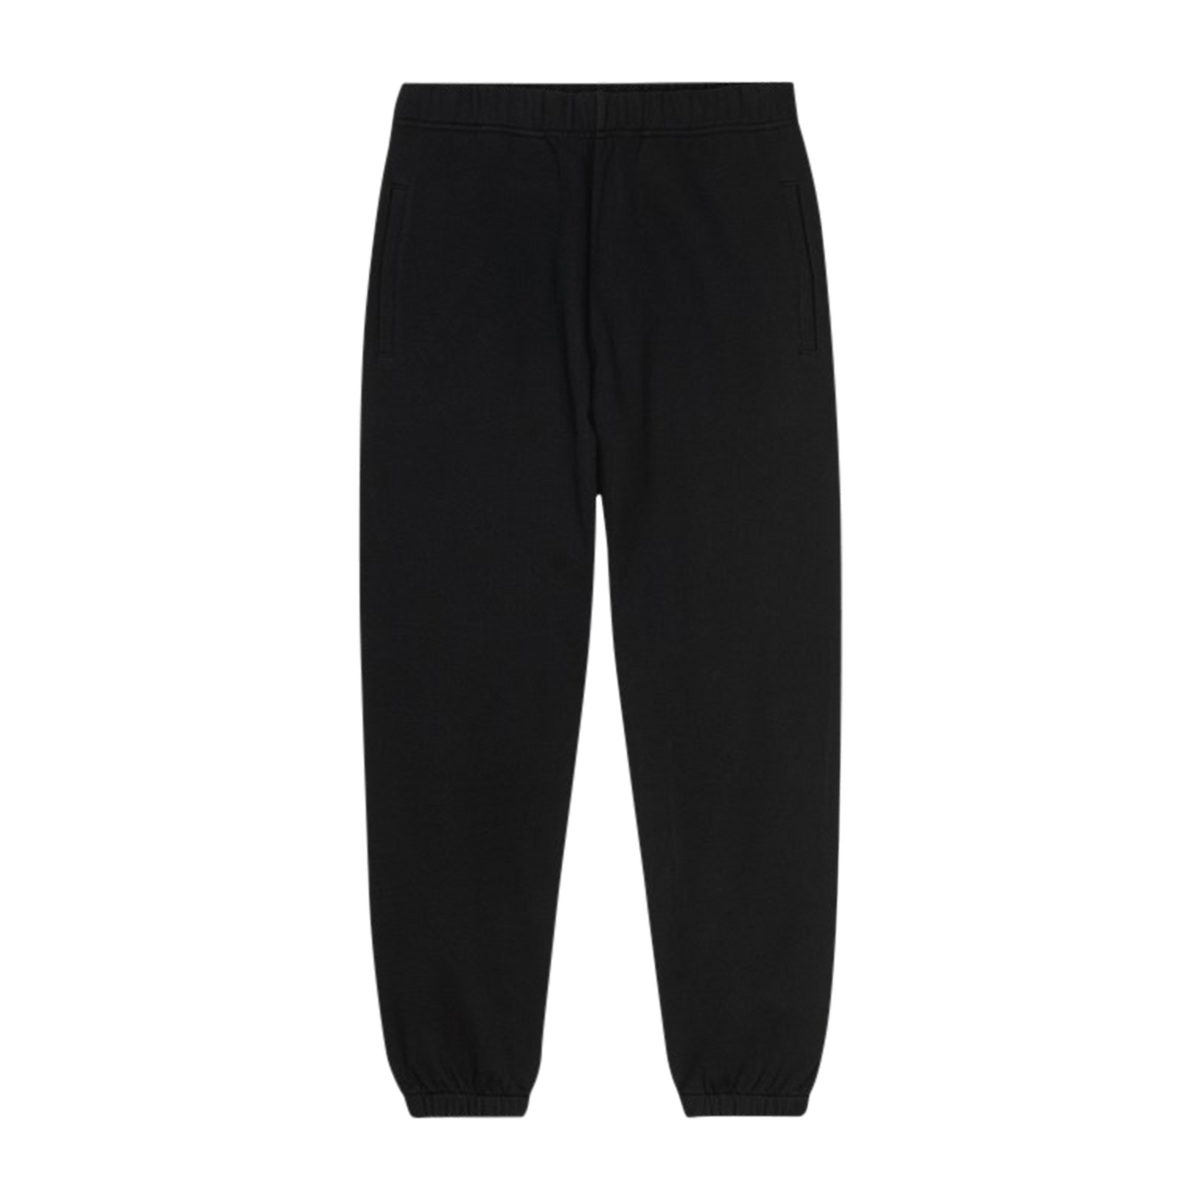 Pocket Sweatpant - Black